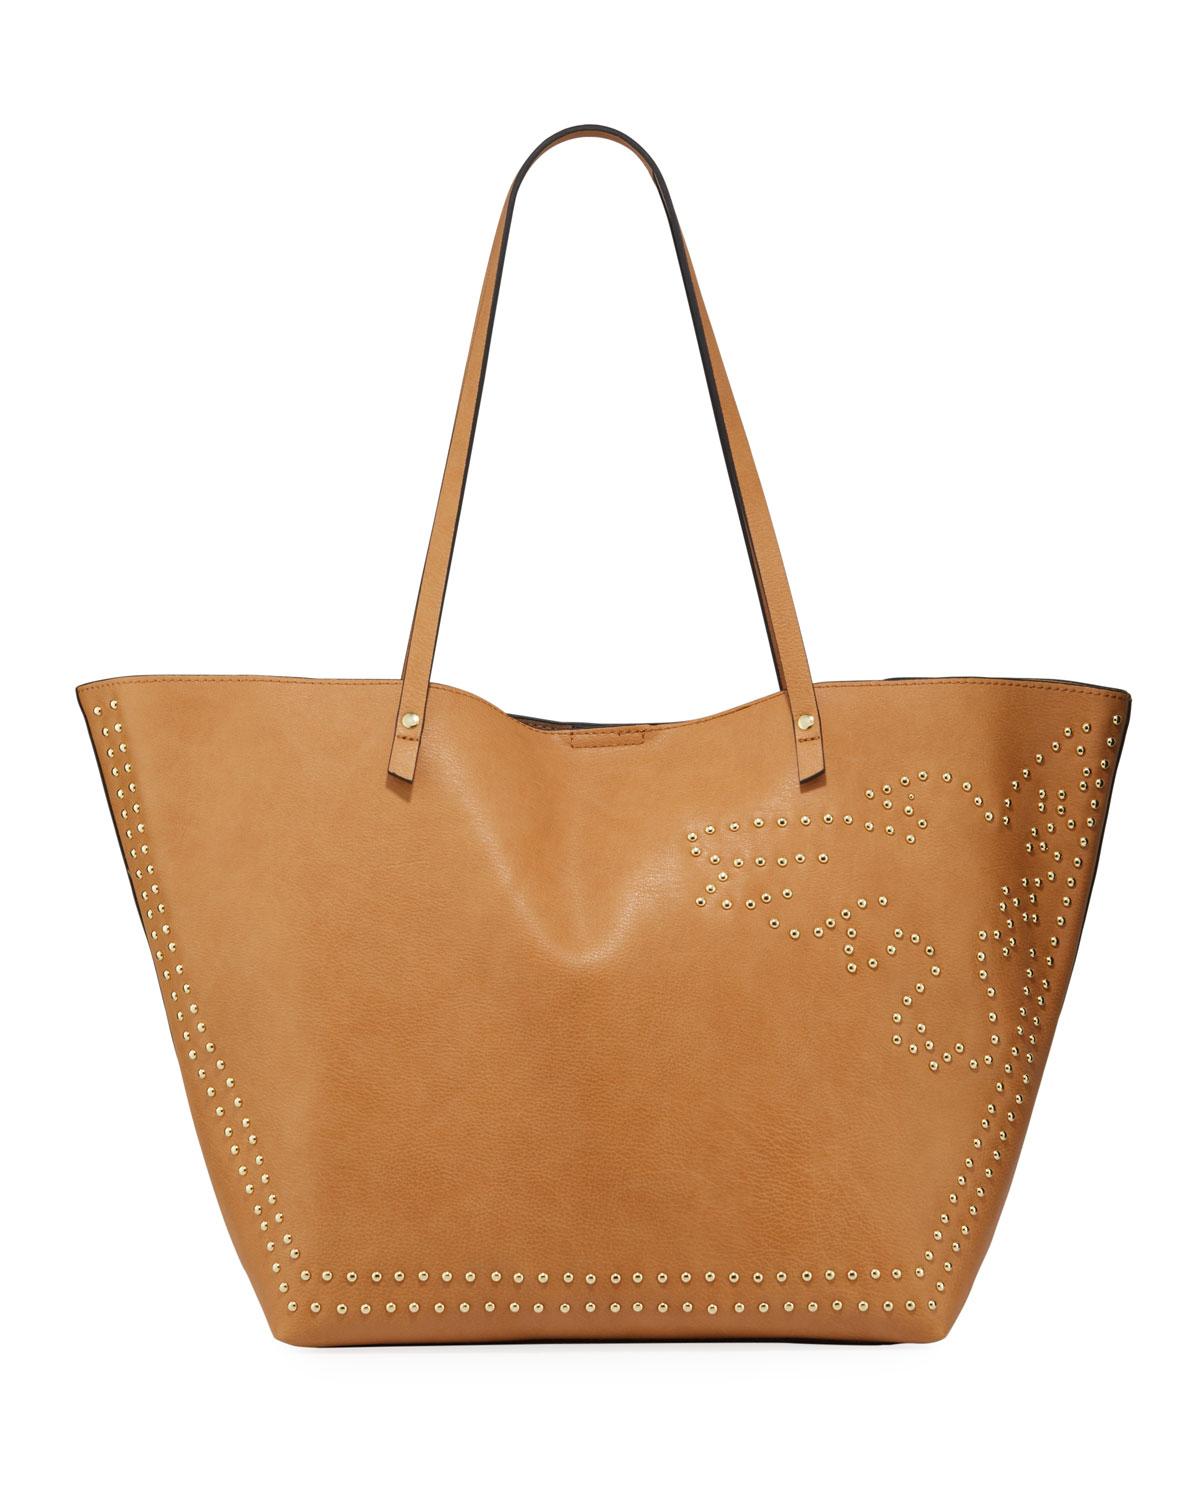 Neiman Marcus Alma Studded Tote Bag in Tan (Brown) - Lyst